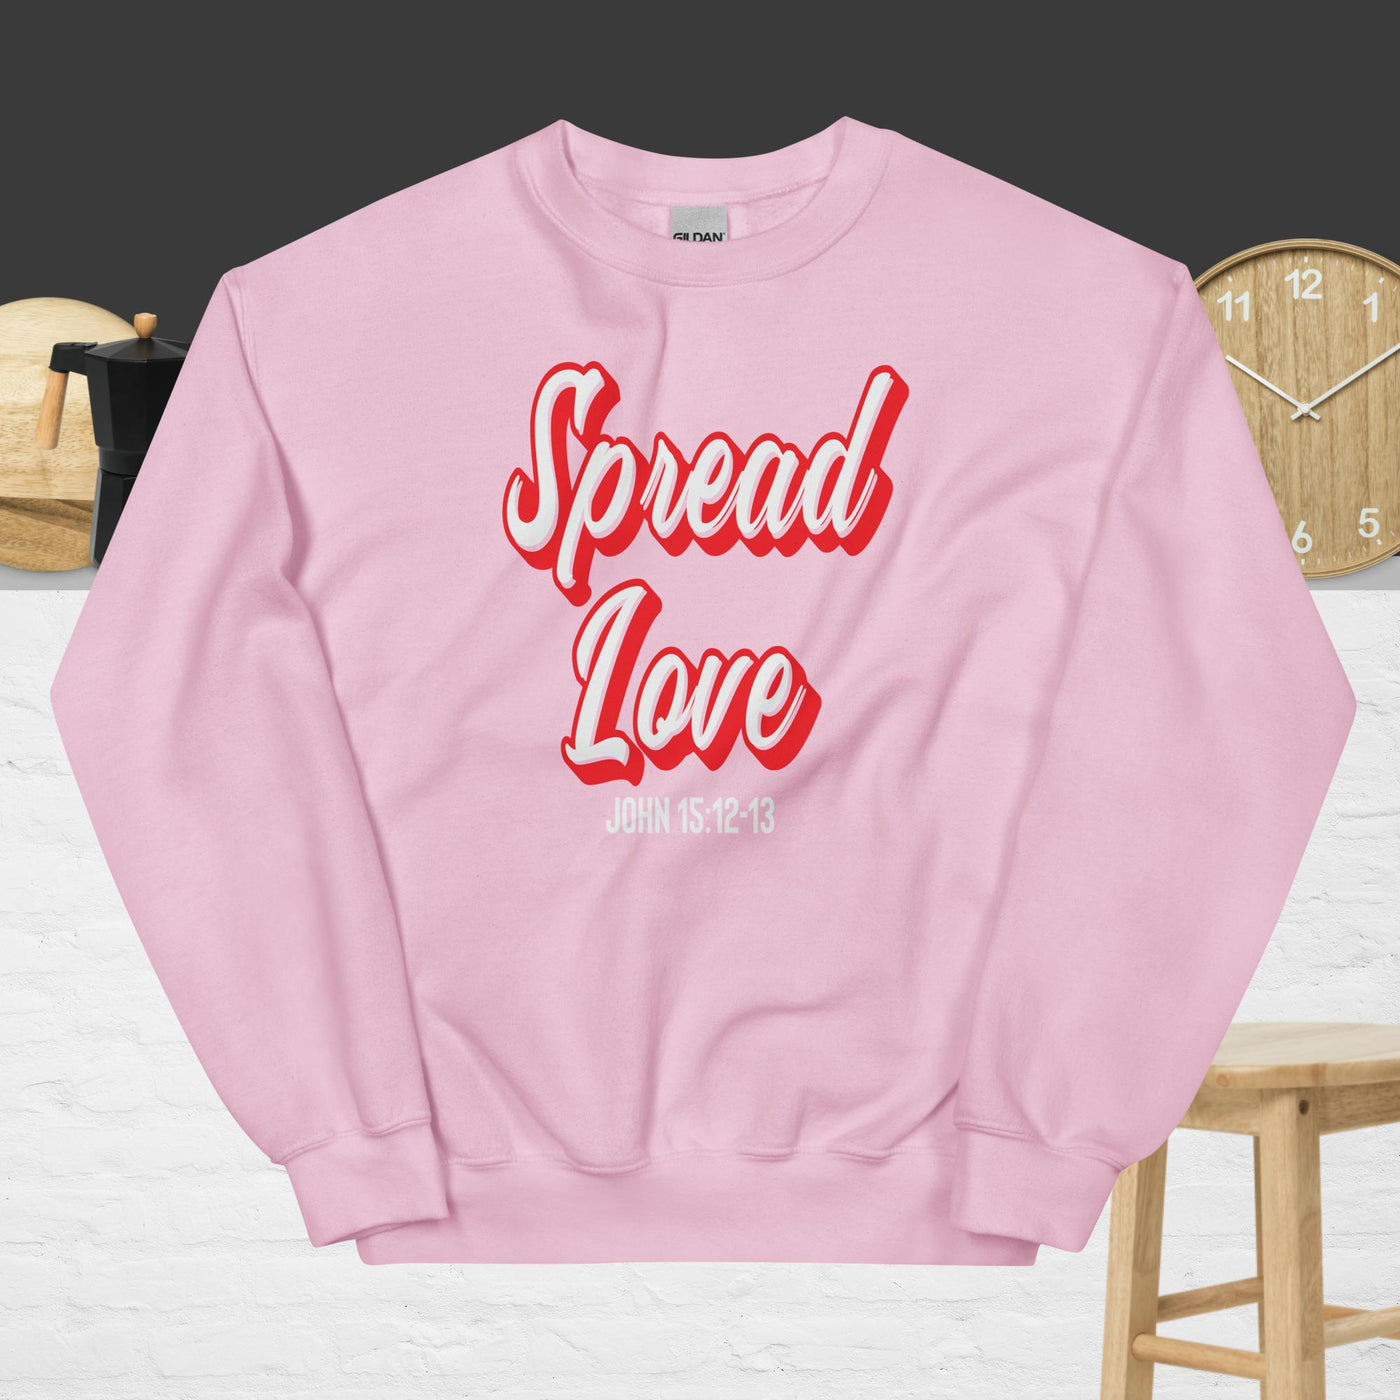 F&H Spread Love Sweatshirt